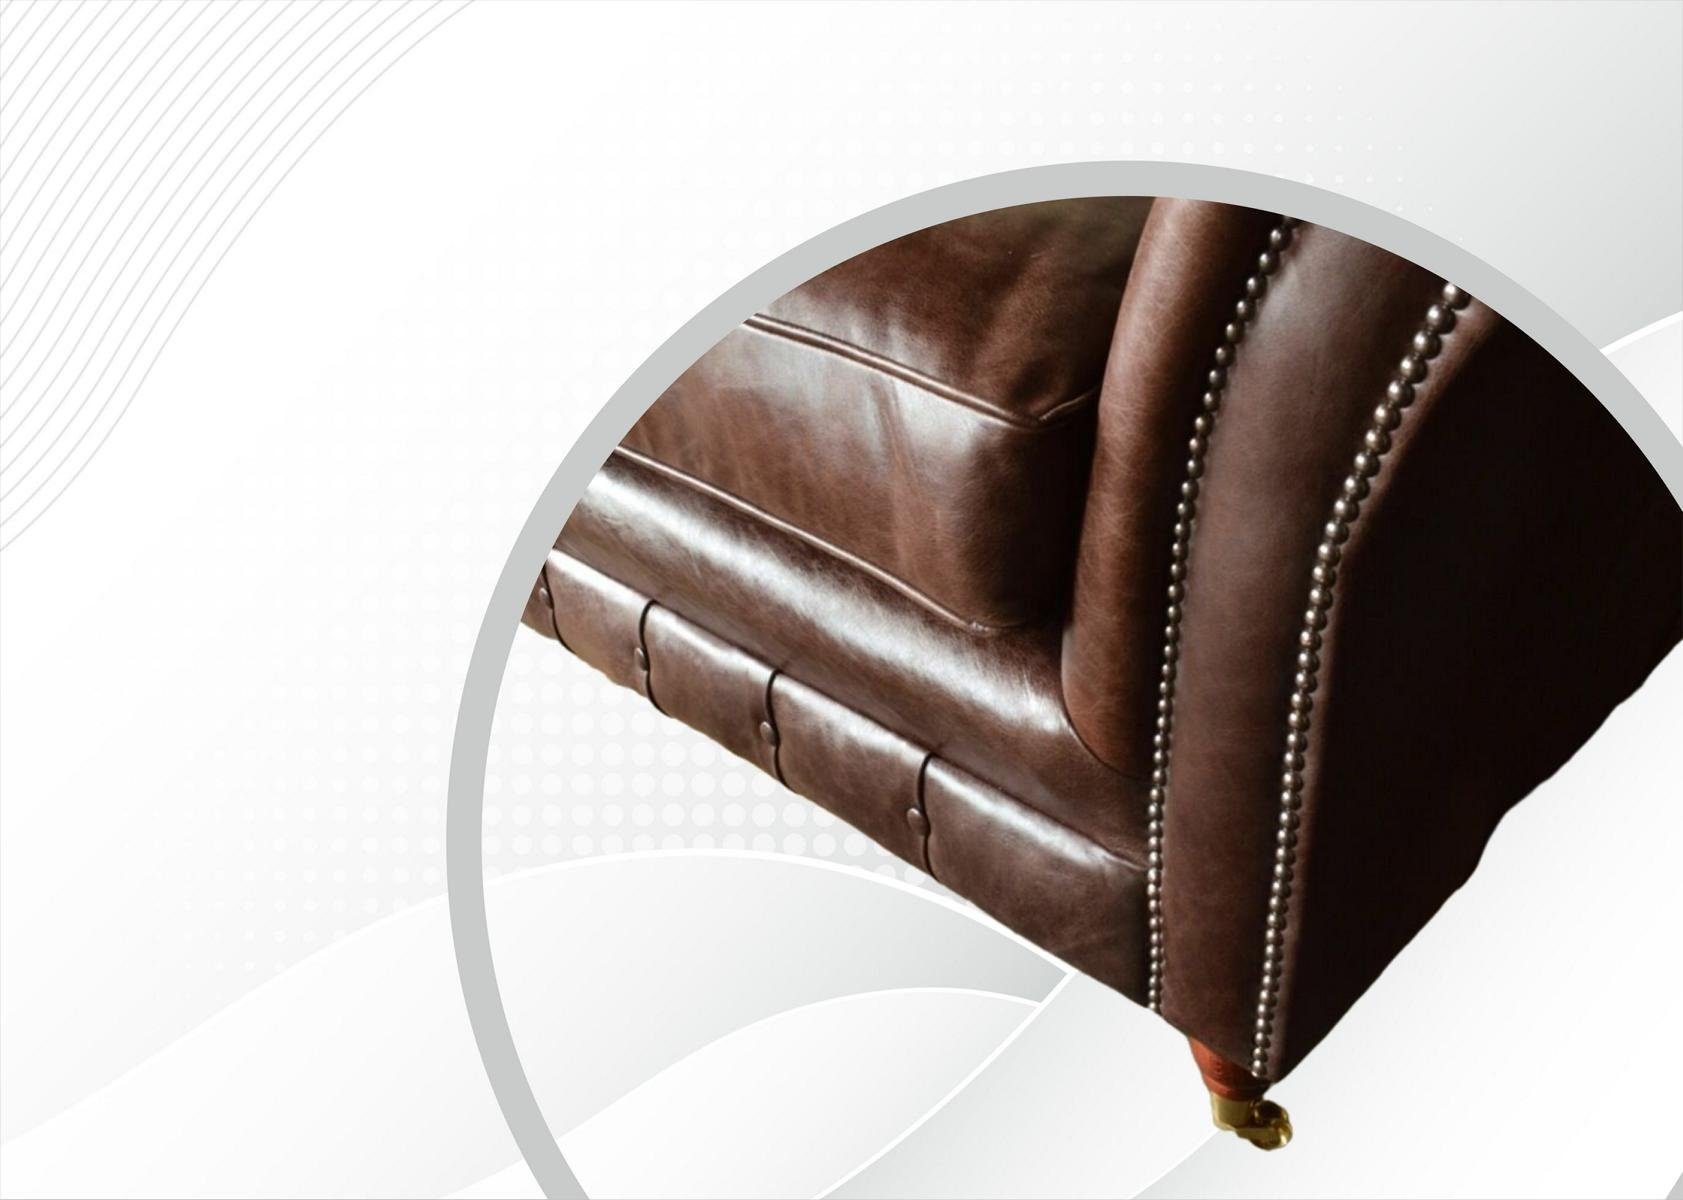 JVmoebel 225 Sofa 3 Sitzer Chesterfield Chesterfield-Sofa, Couch Sofa cm Design